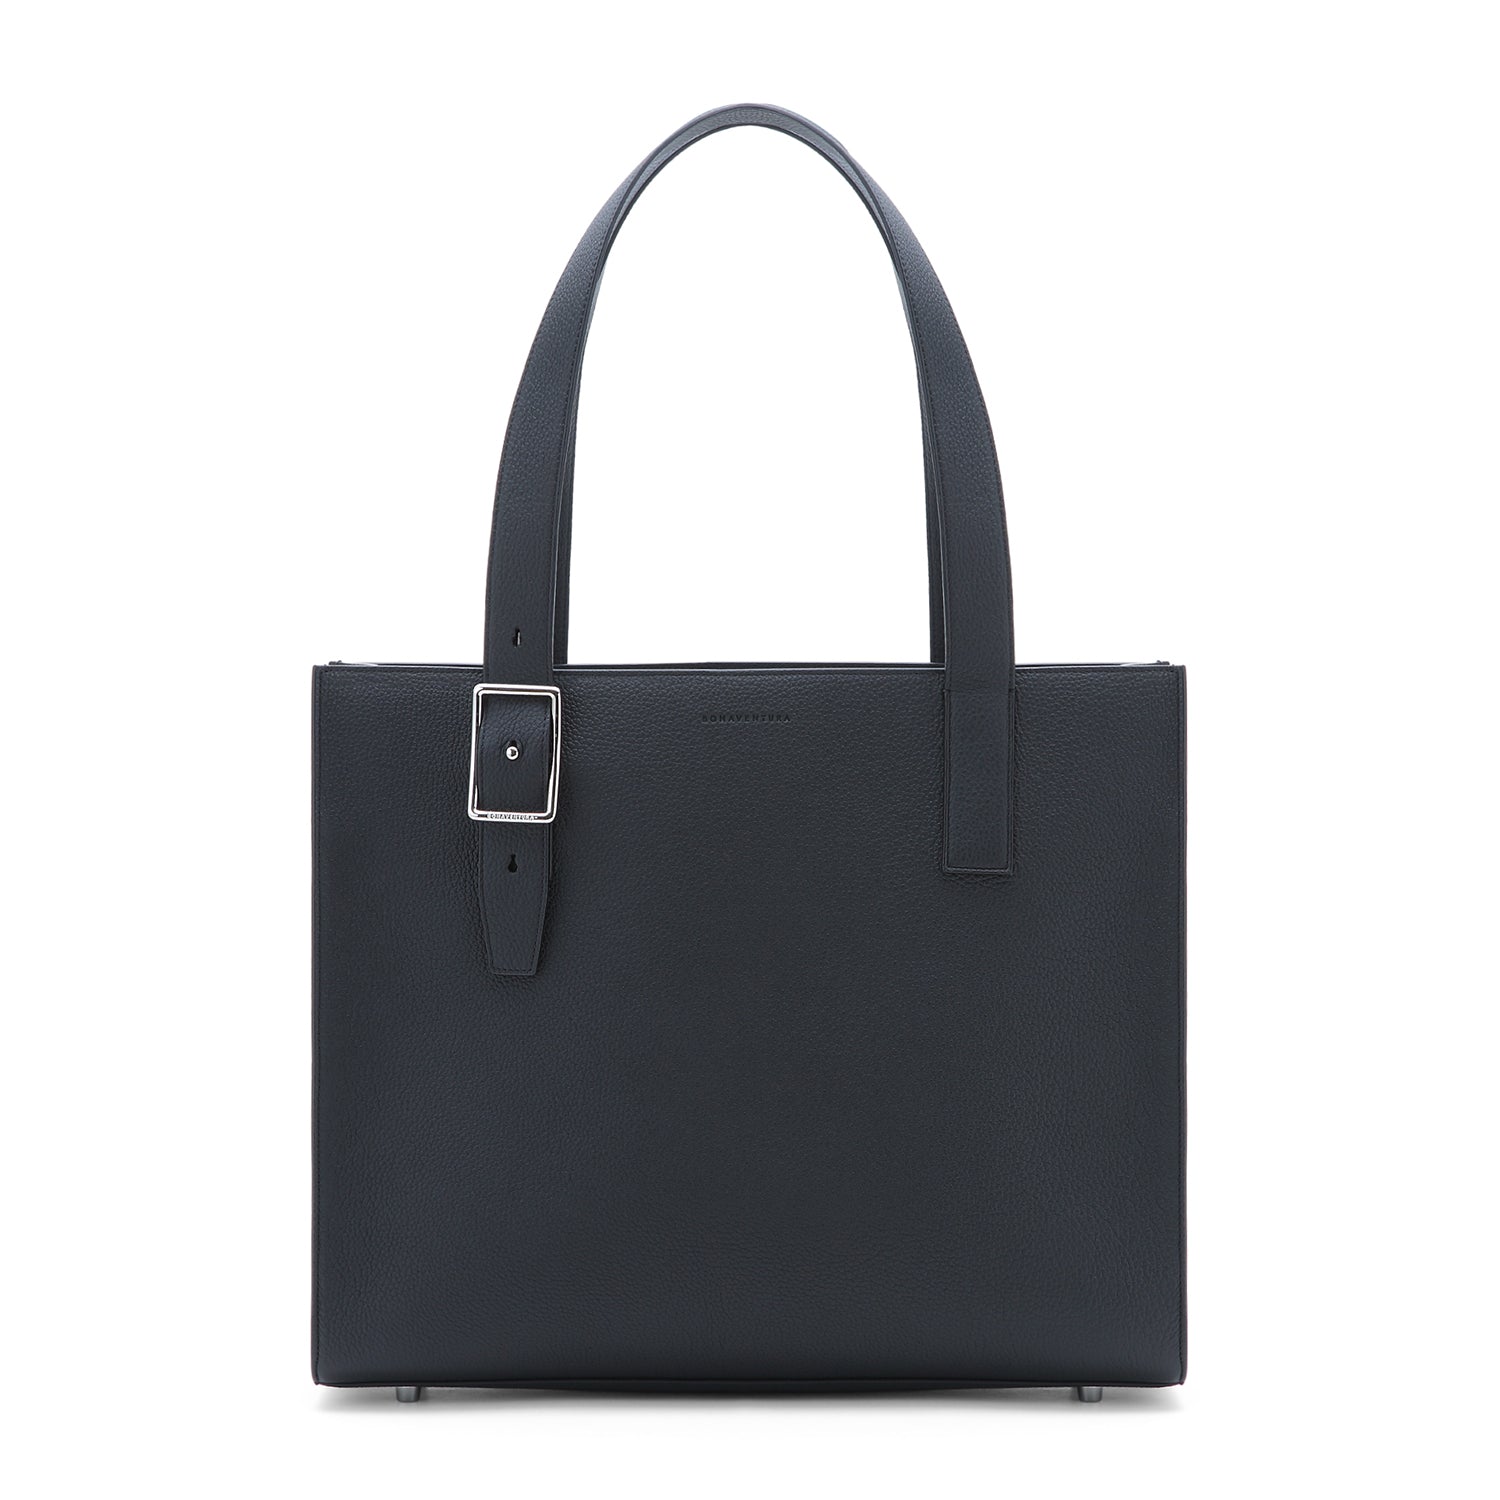 Nicola Tote Bag in Shrink Leather, Black